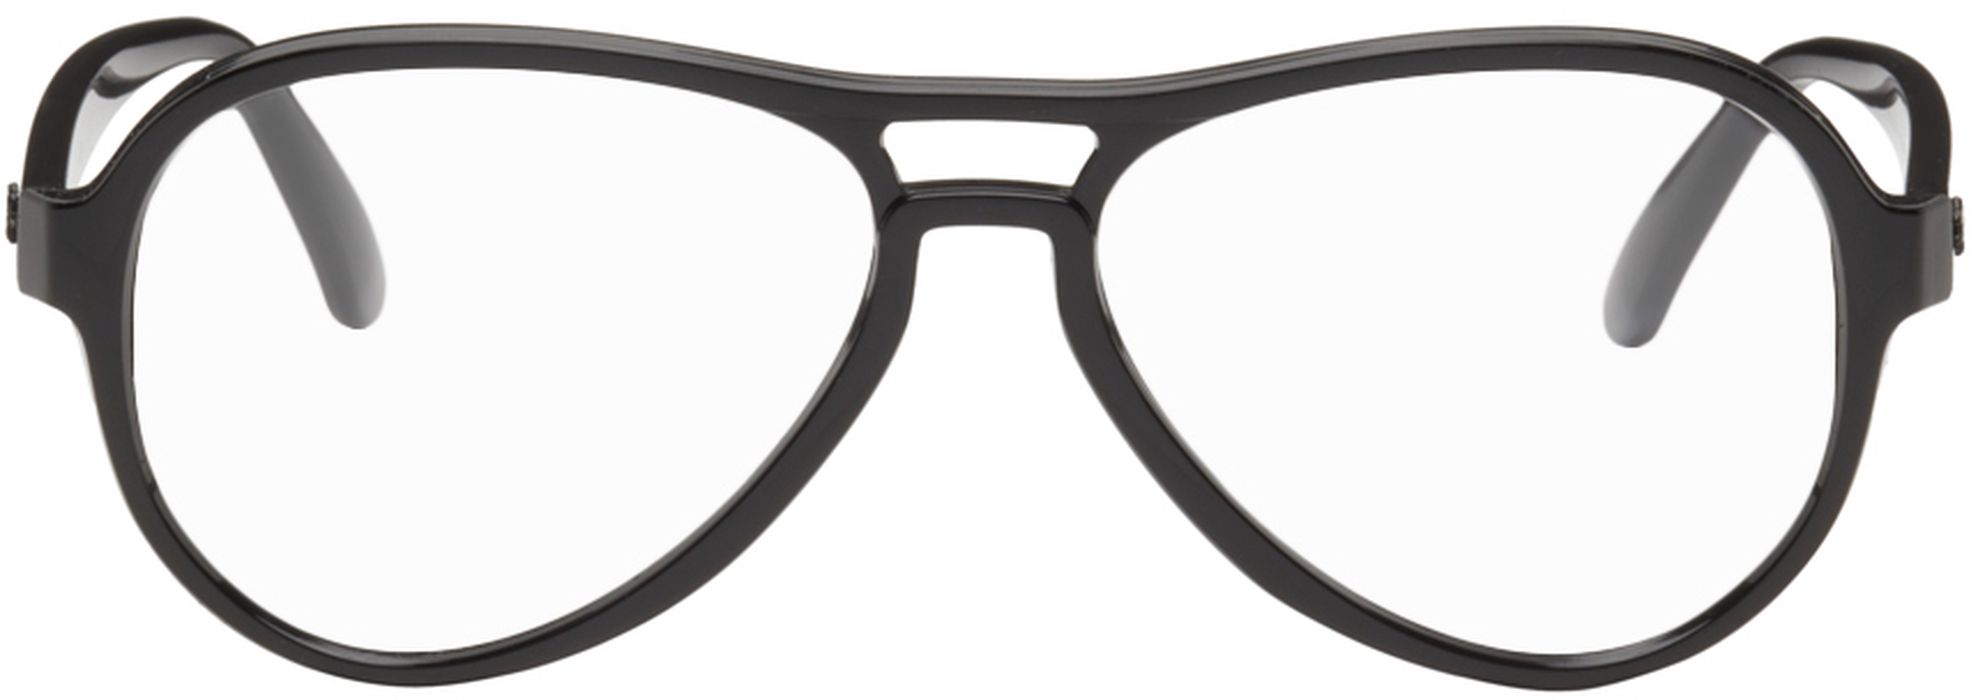 Ray-Ban Black Acetate Vagabond Glasses